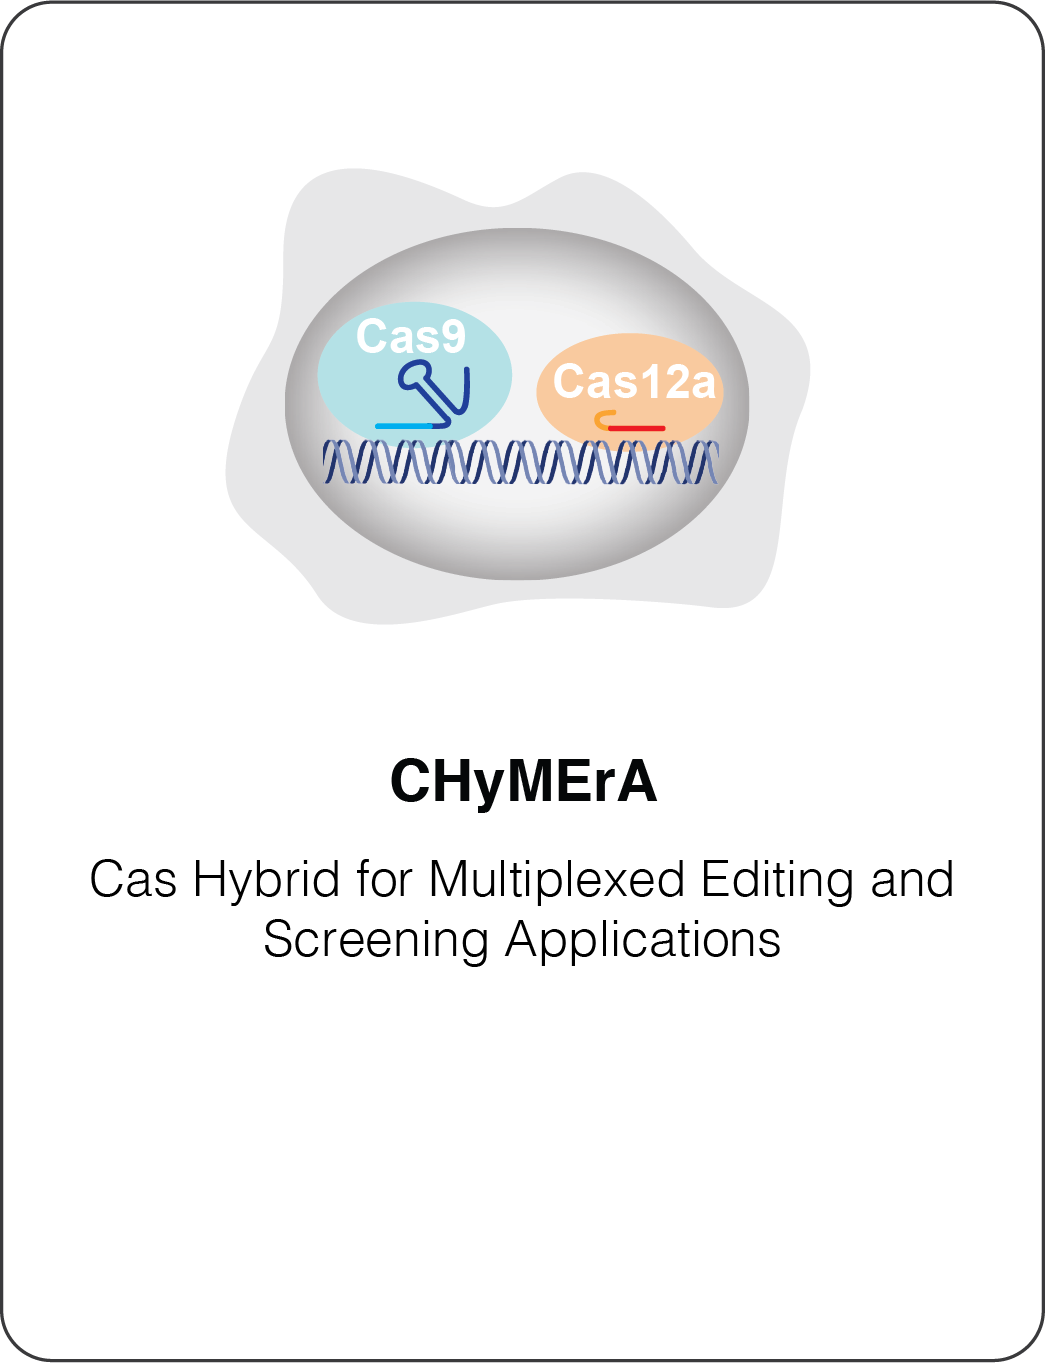 Chymera logo